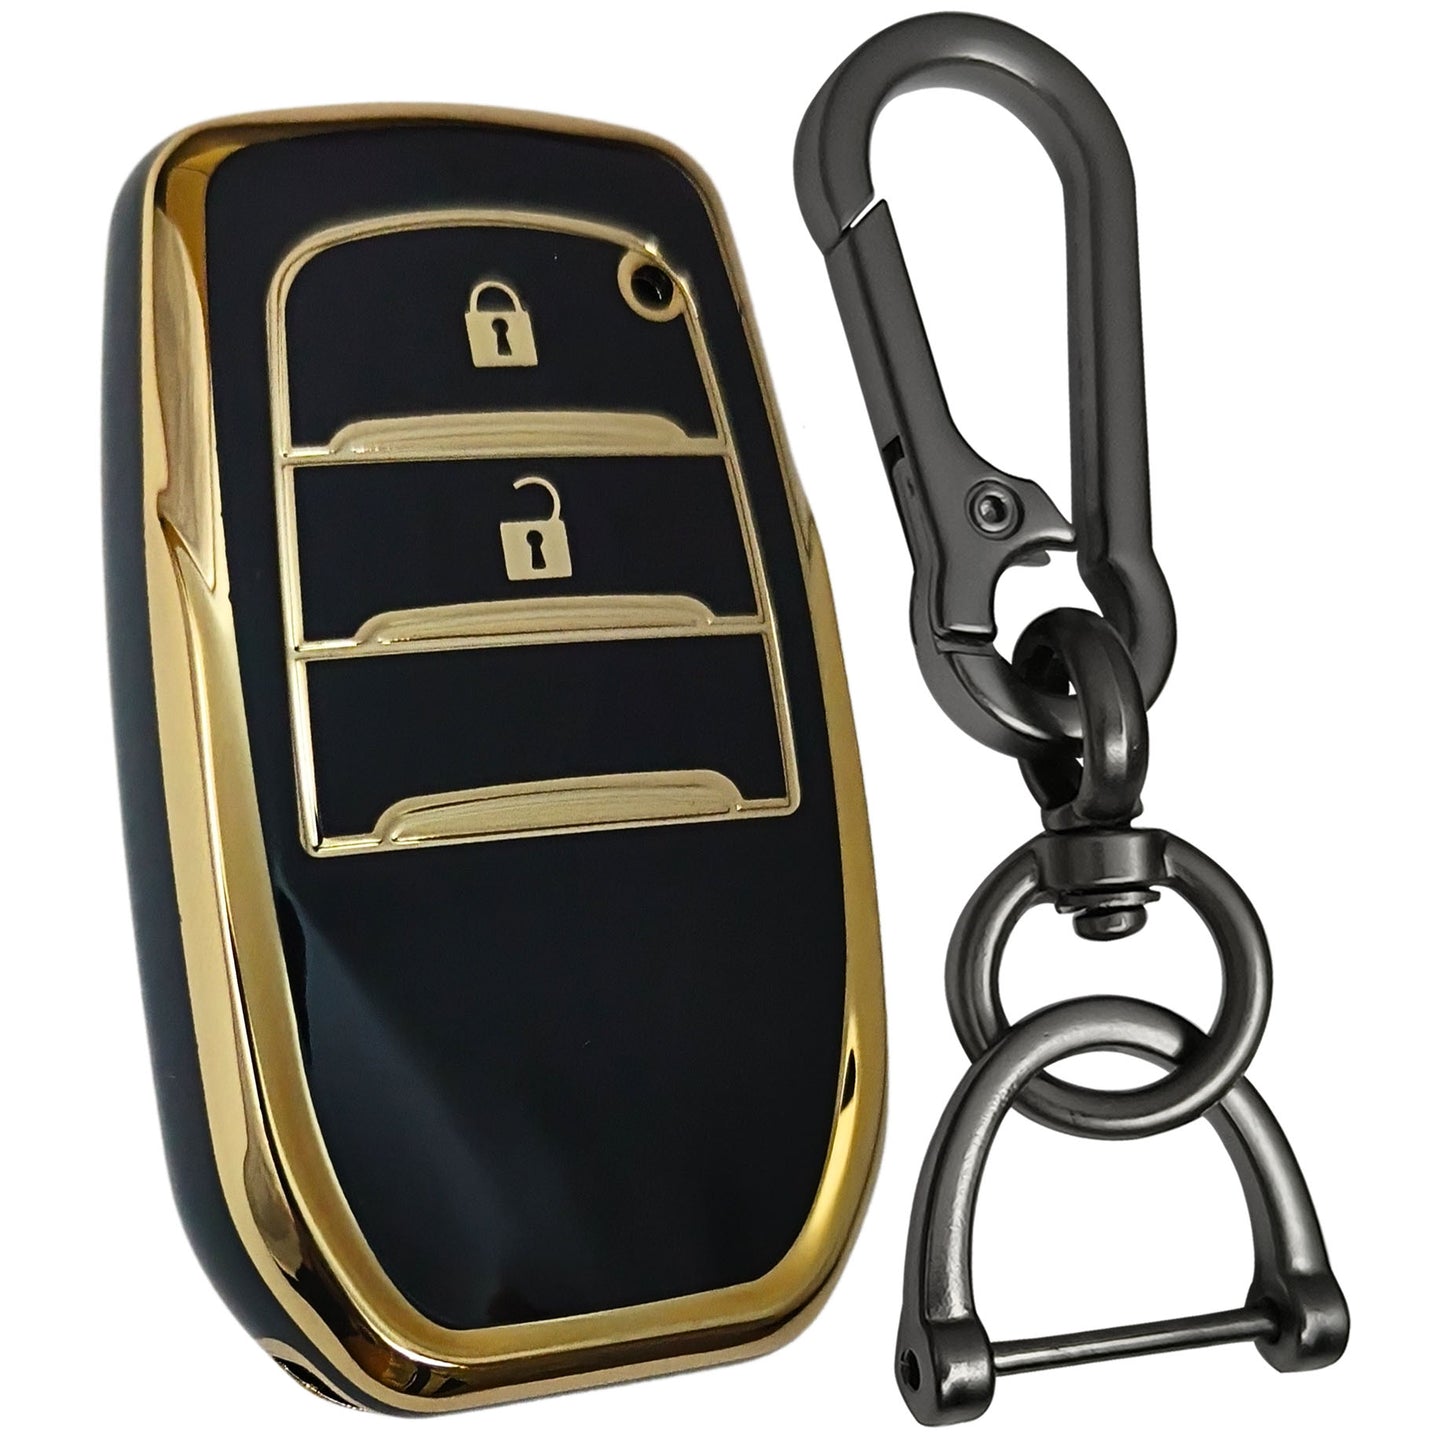 toyota fortuner innova crysta 2b smart tpu black gold key accessories keychain